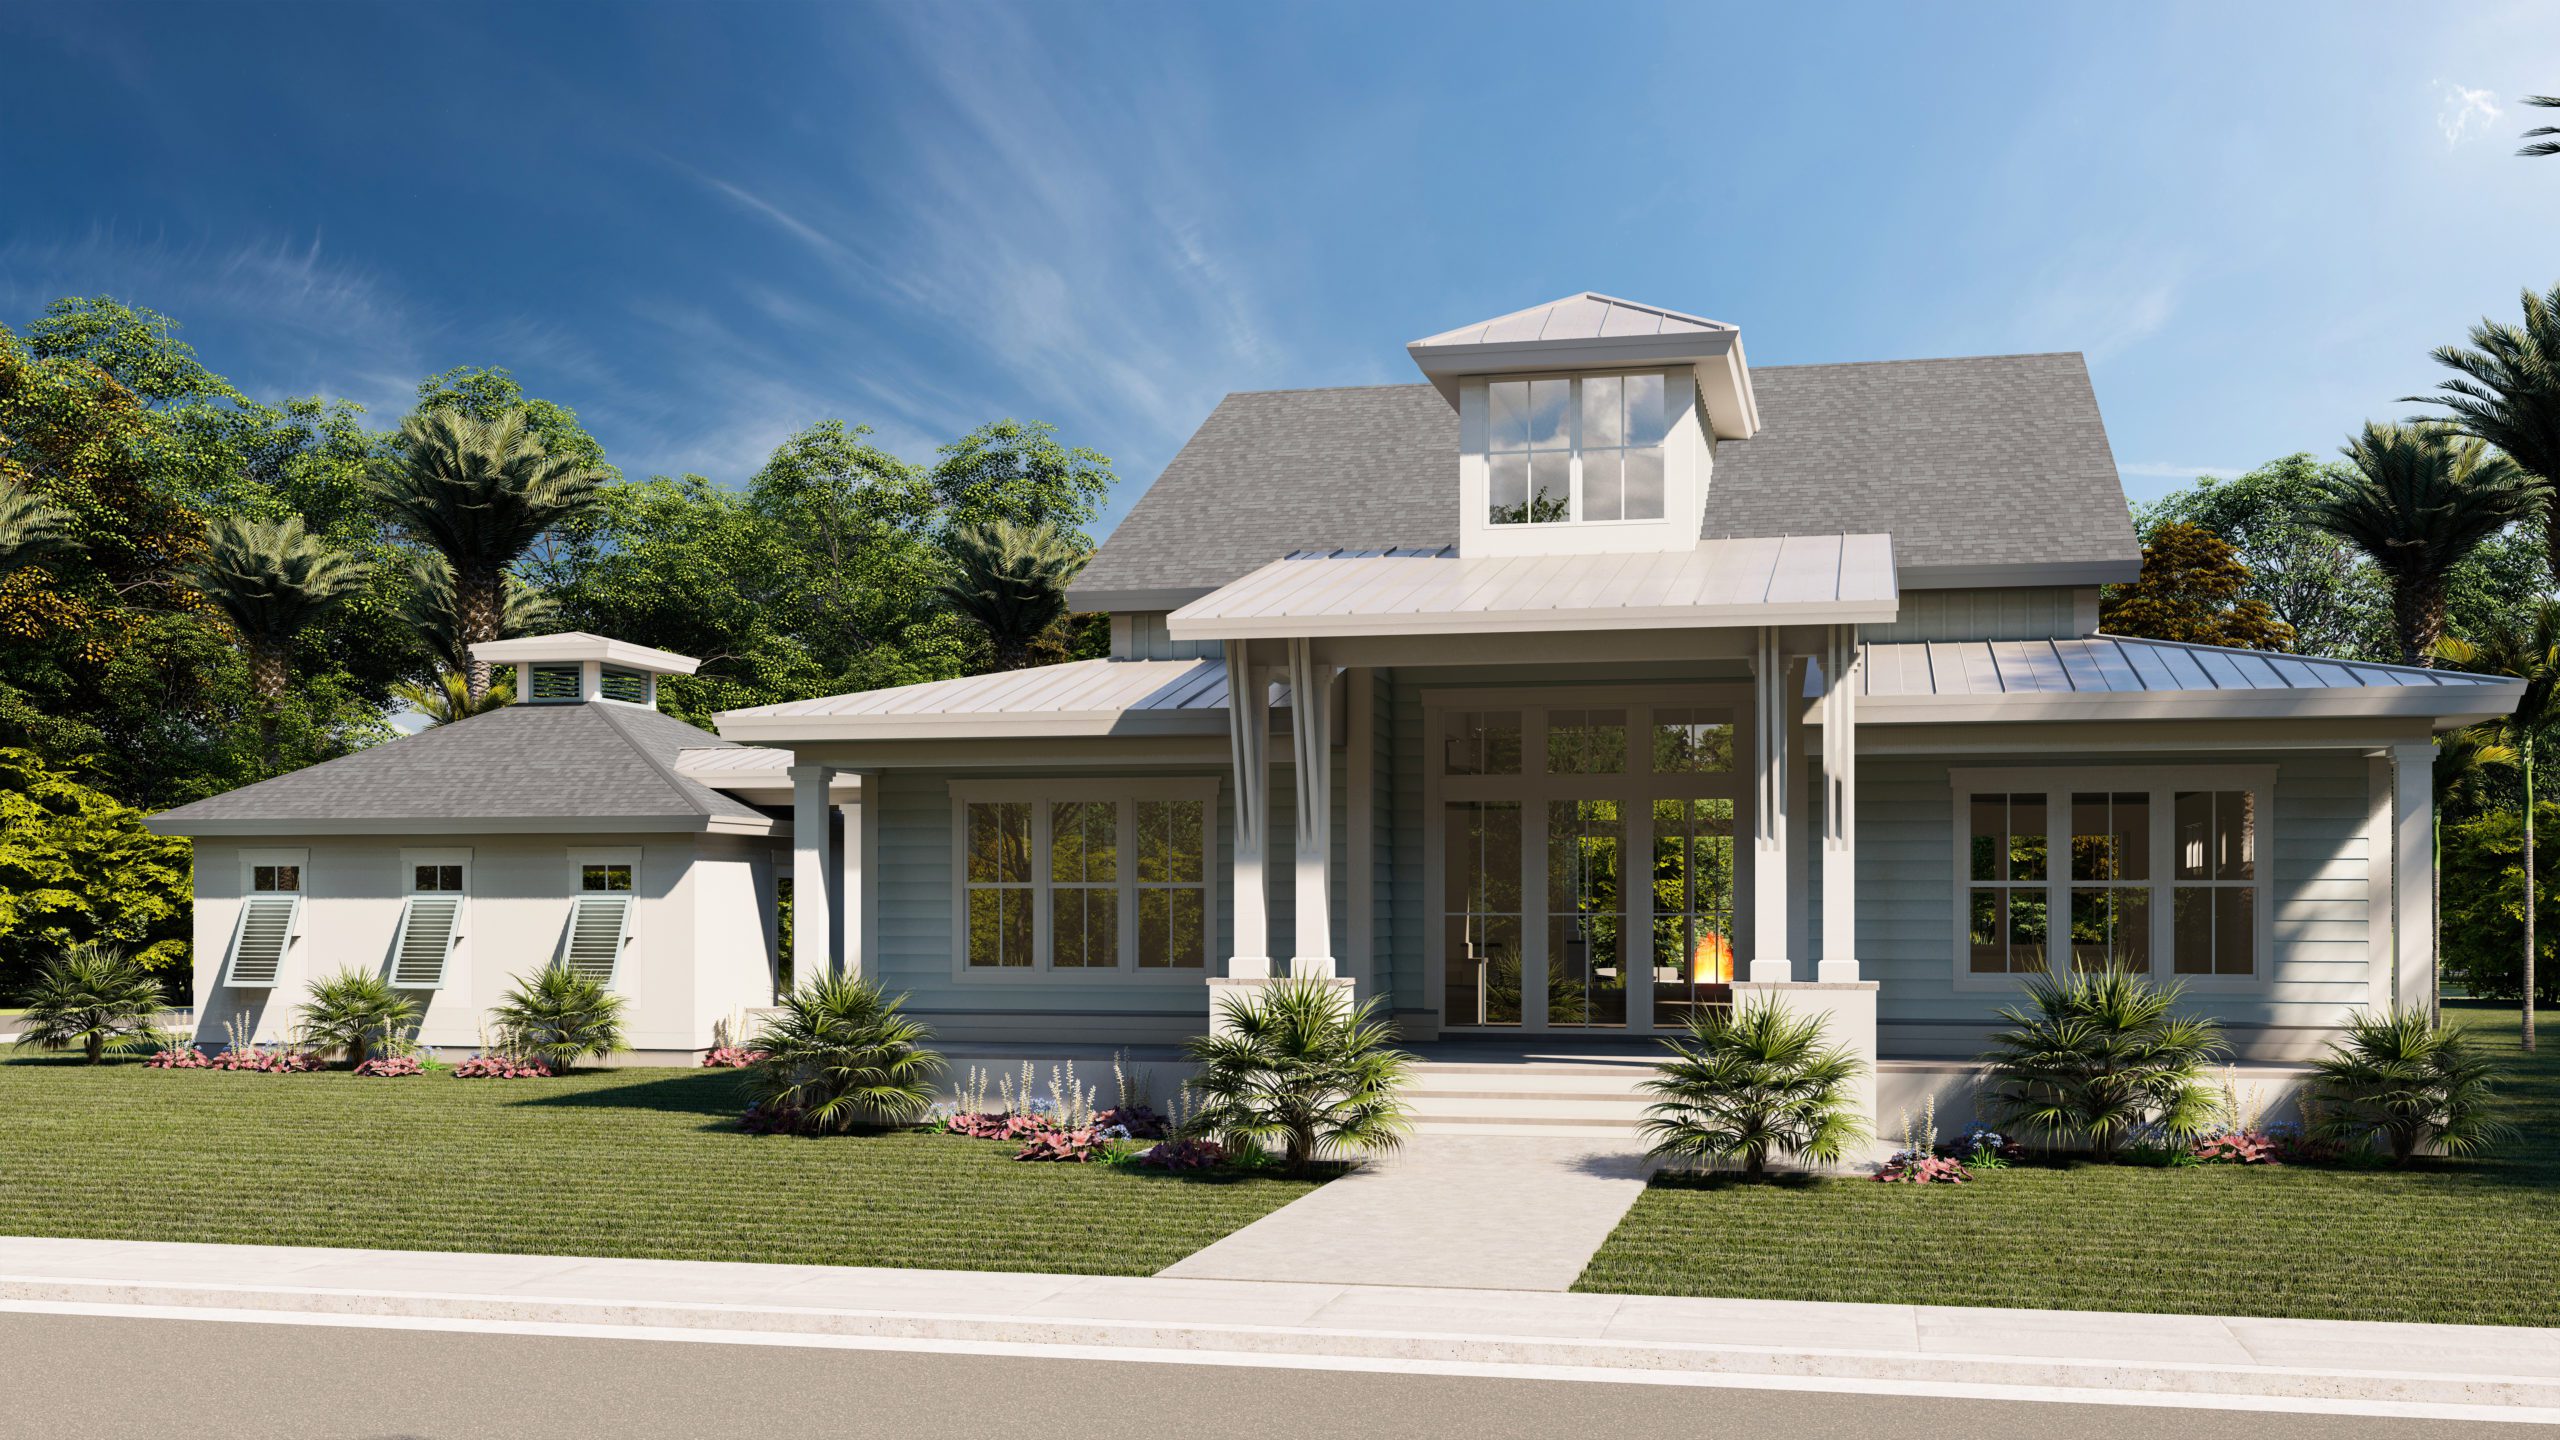 Rendering of a custom built home design including landscaping